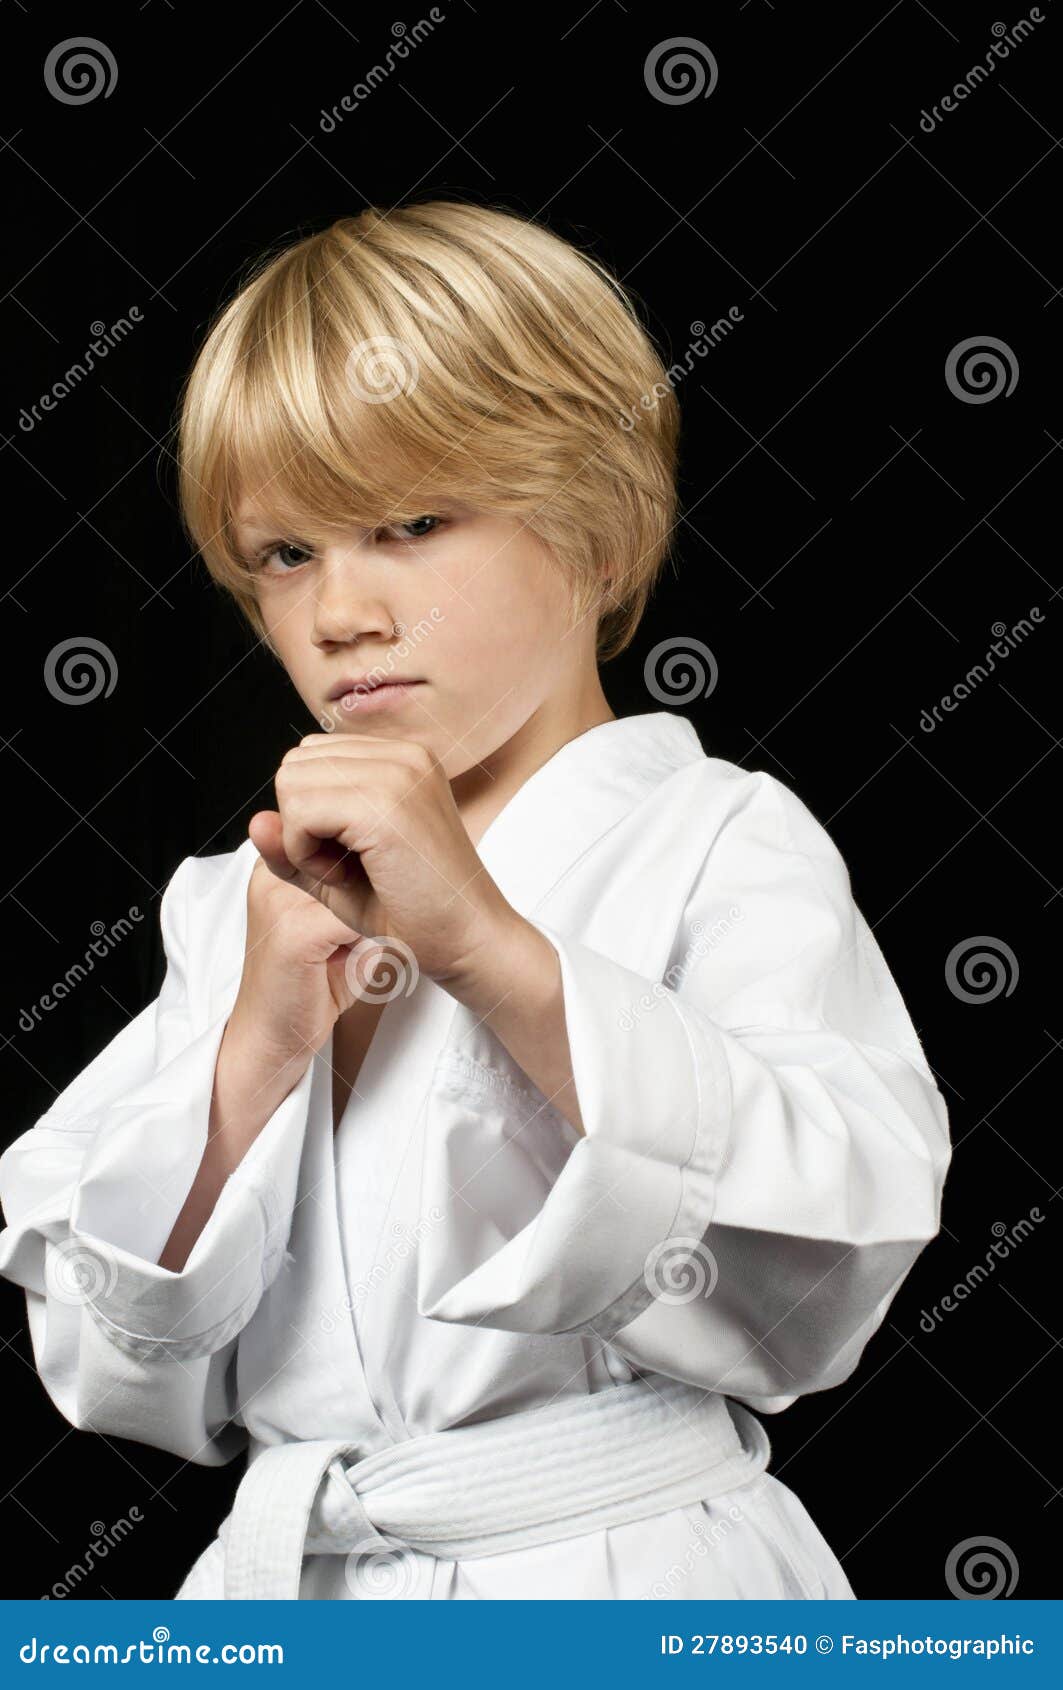 Karate Kid Training Stock Photo - Image: 27893540